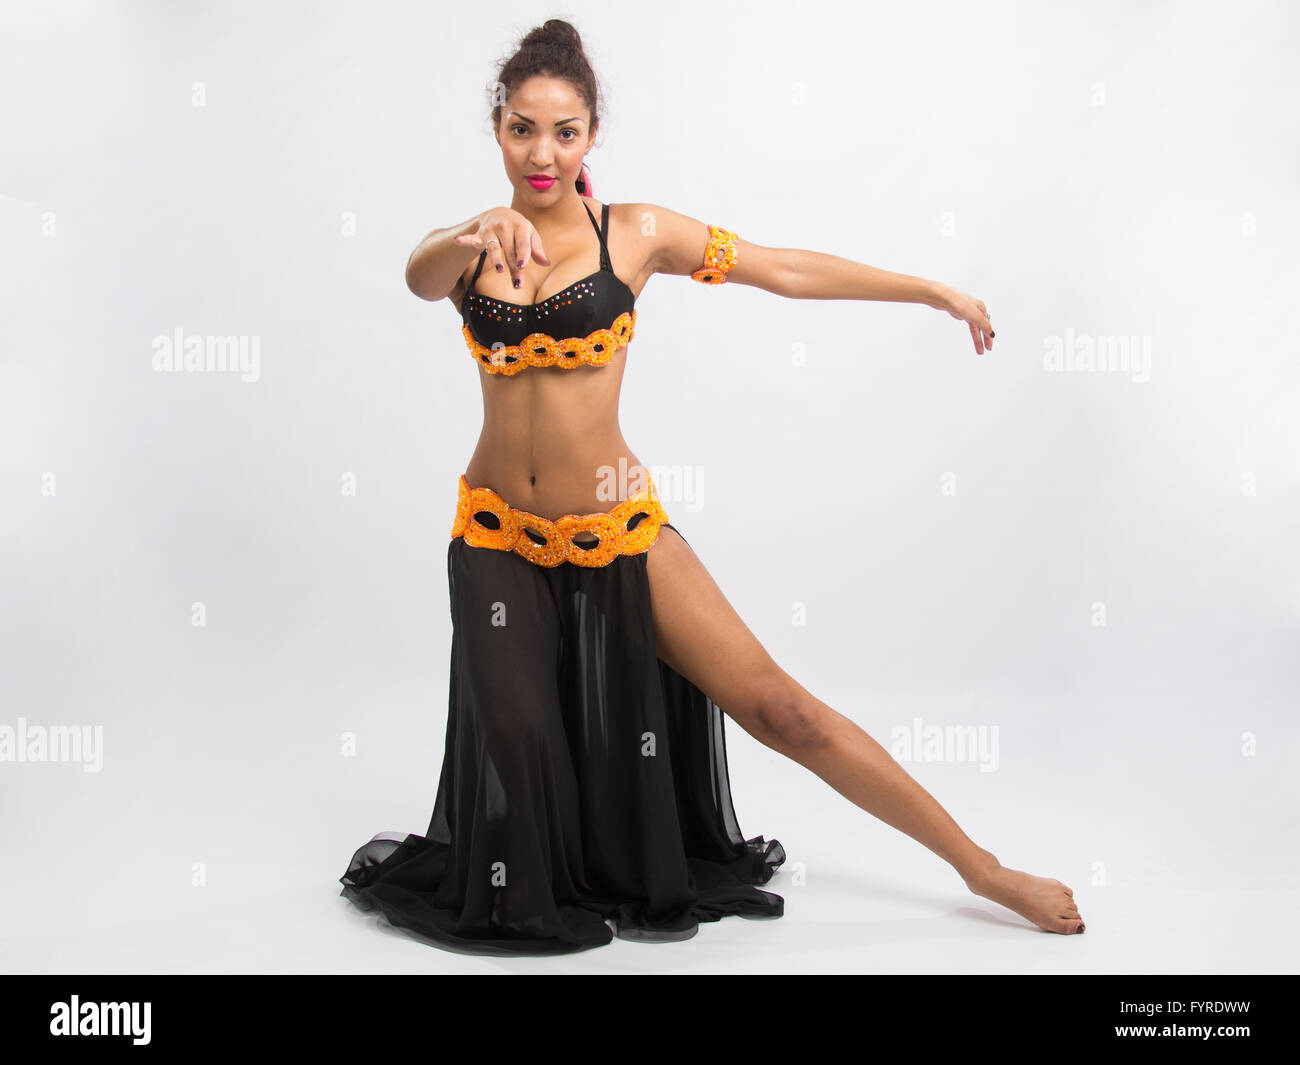 Victoria Belly Dancer Poses | Daz 3D